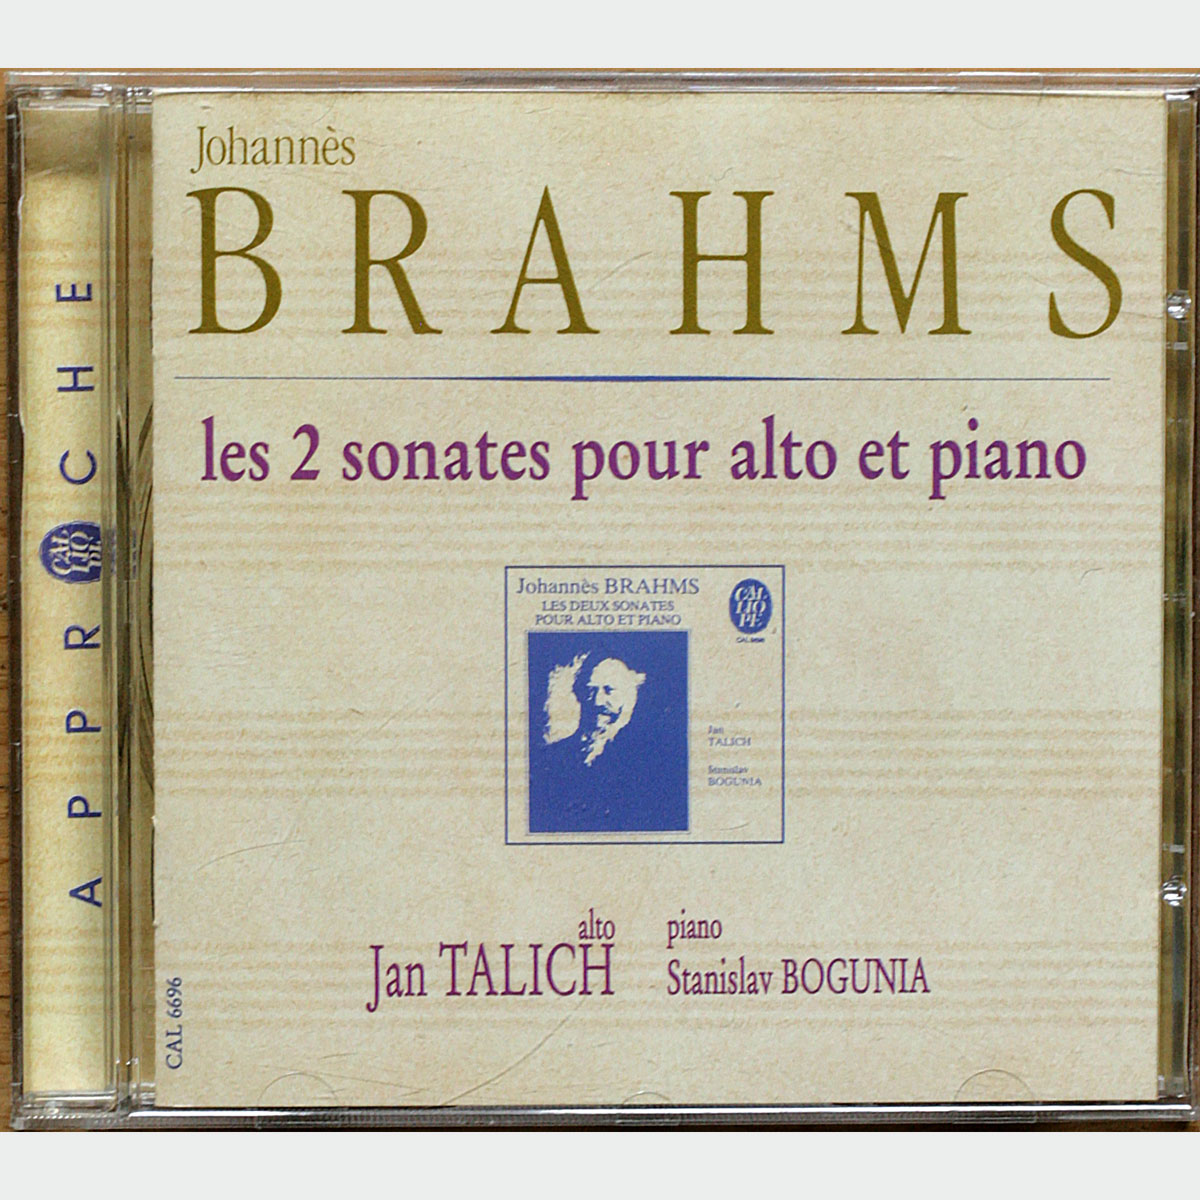 Brahms • Sonates pour alto & piano n° 1 & 2 – Op. 120 • Rubinstein • Sonate pour alto & piano – Op. 49 • Calliope CAL 6696 • Stanislav Bogunia • Jan Talich